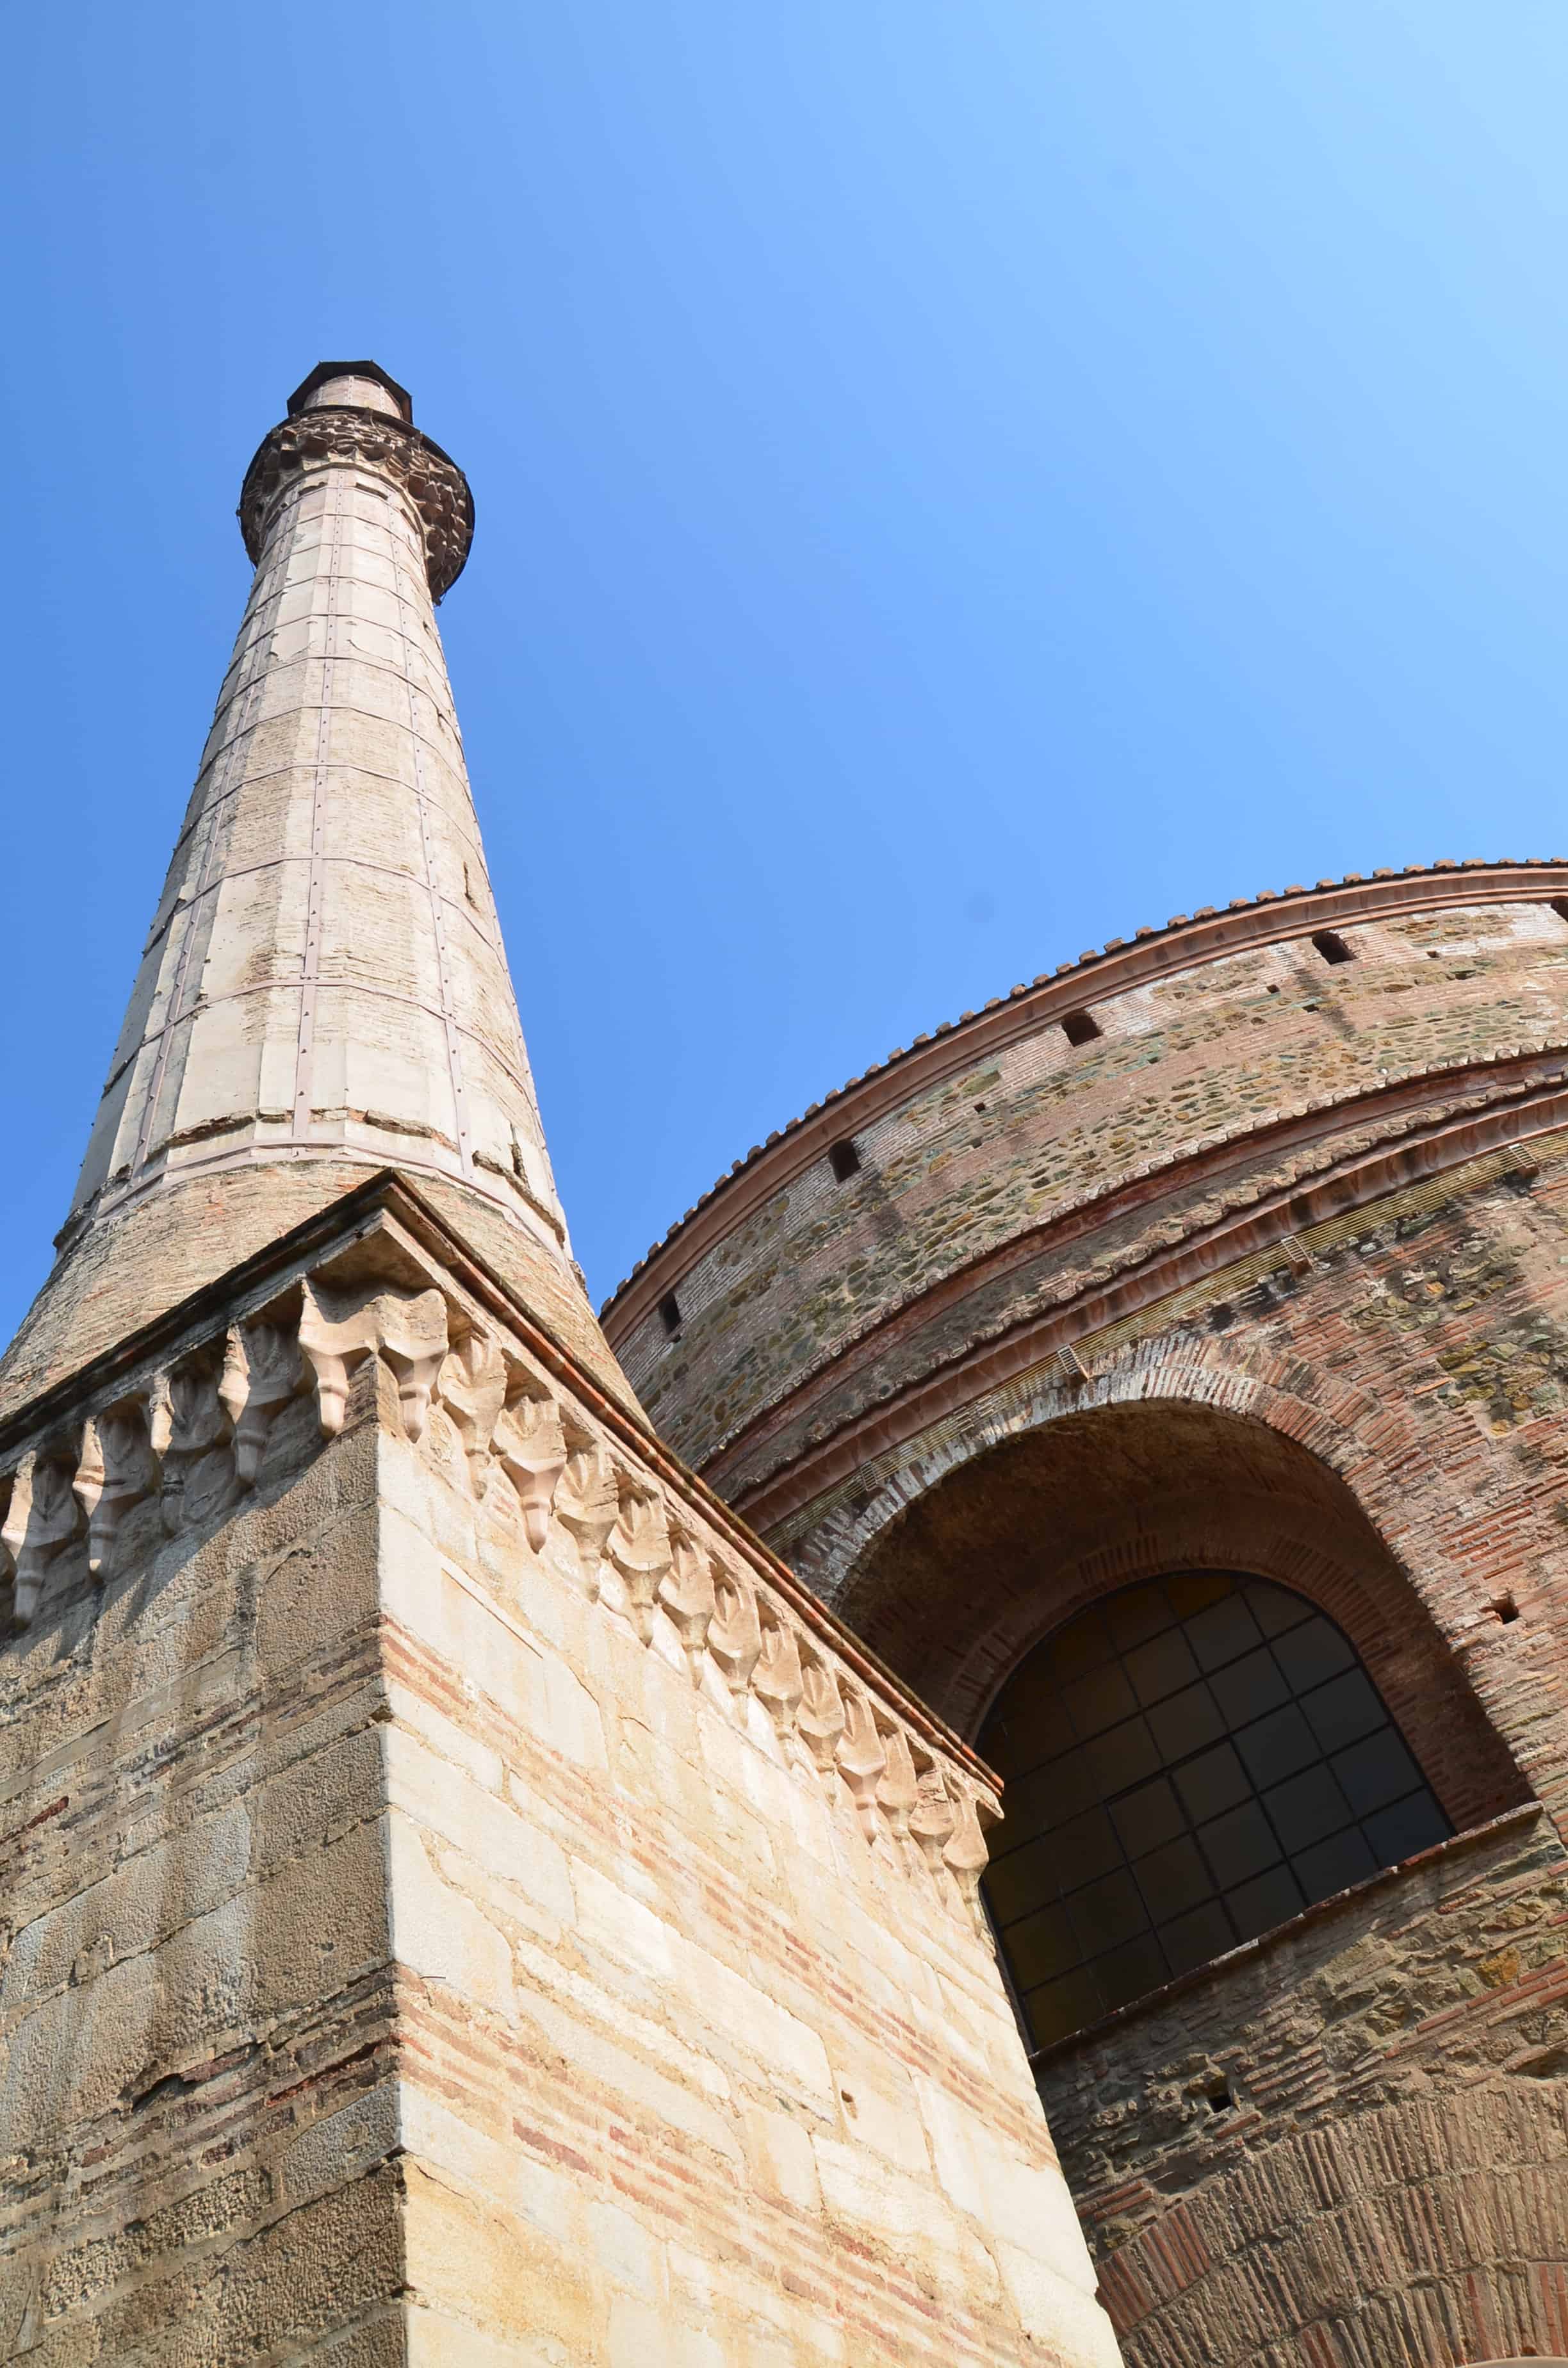 Minaret at the Rotunda in Thessaloniki, Greece